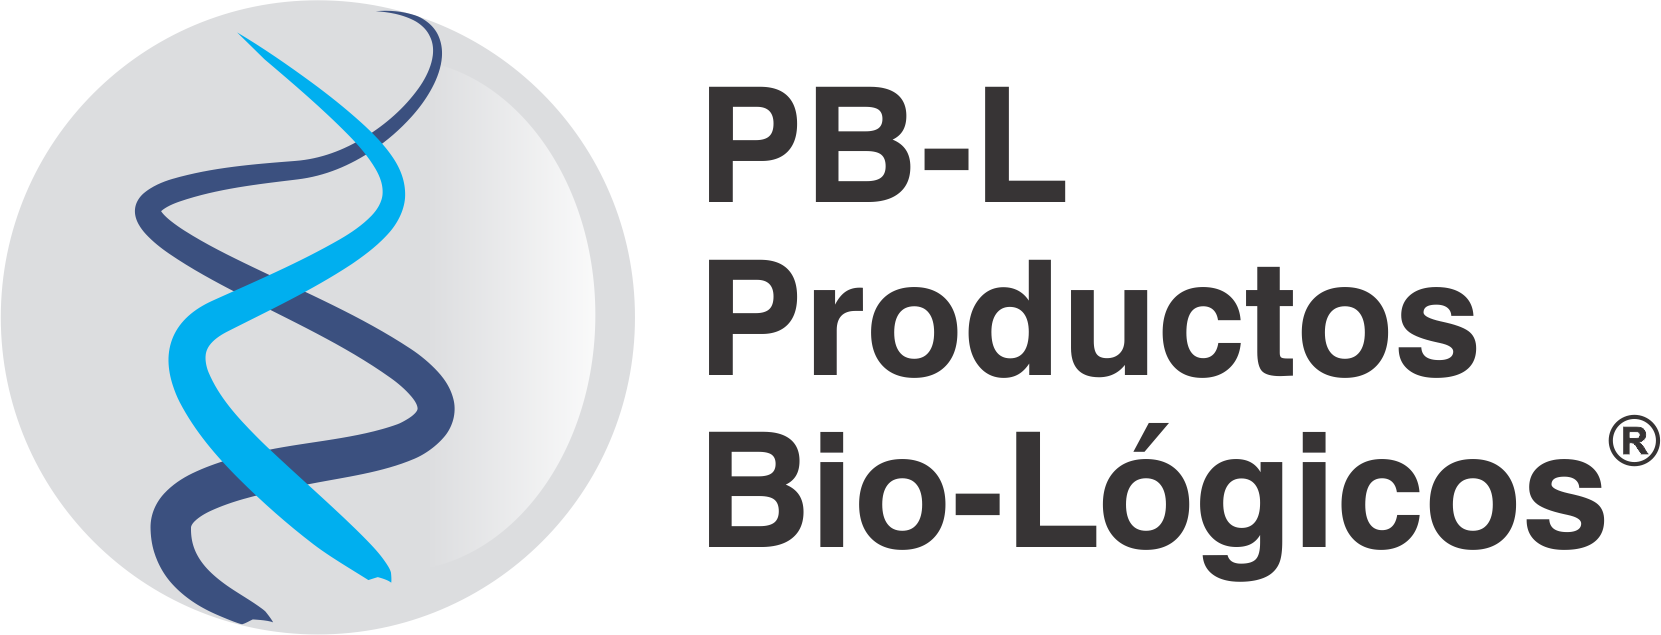 PB-L Productos Bio-lógicos